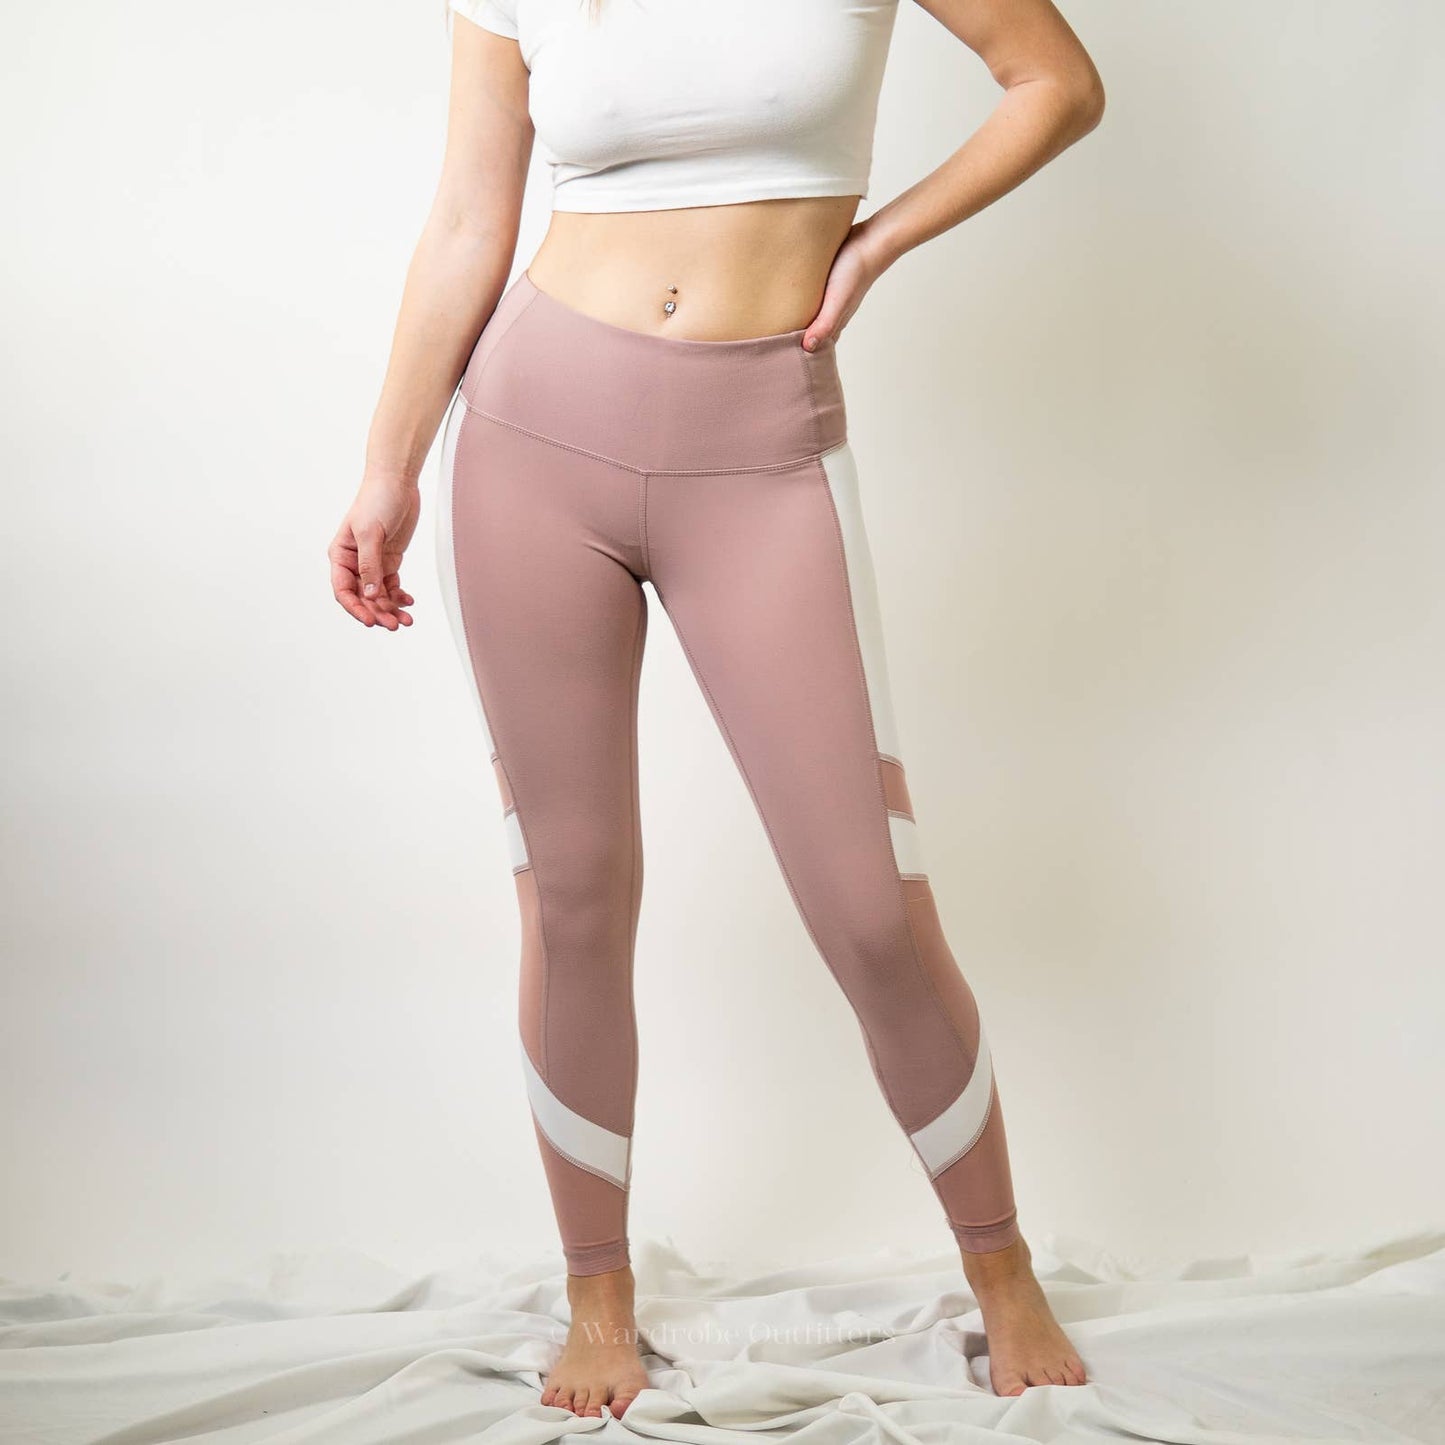 Blush Pink Yoga Leggings by Yogalicious - XS